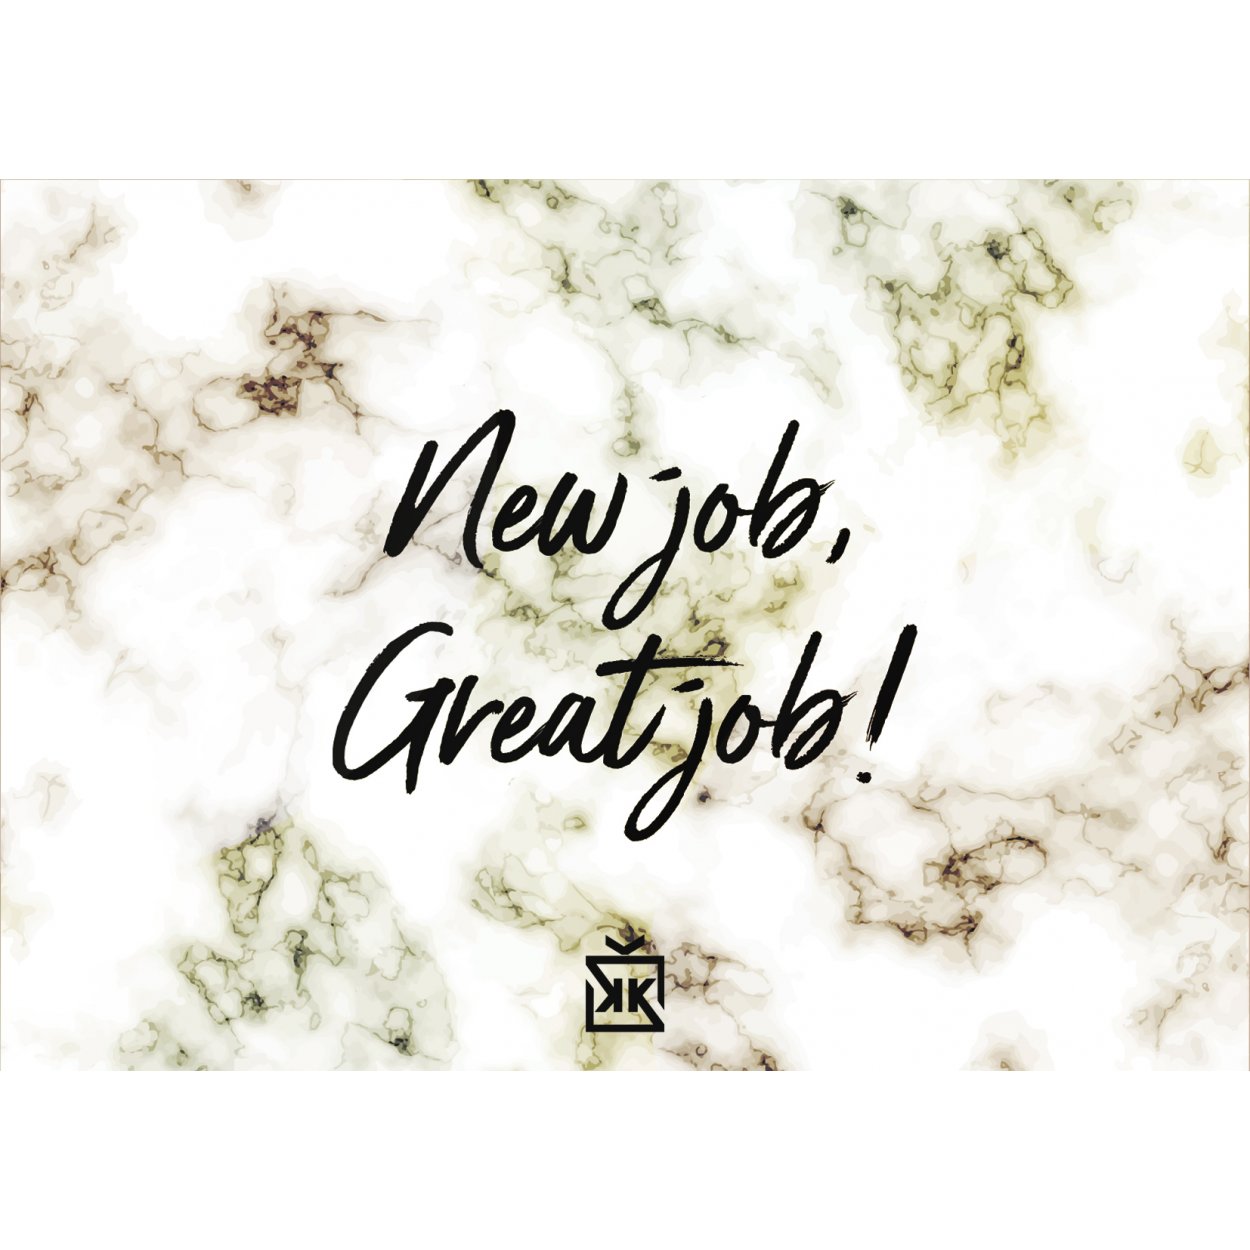 75488-new-job-great-job-motto-karti